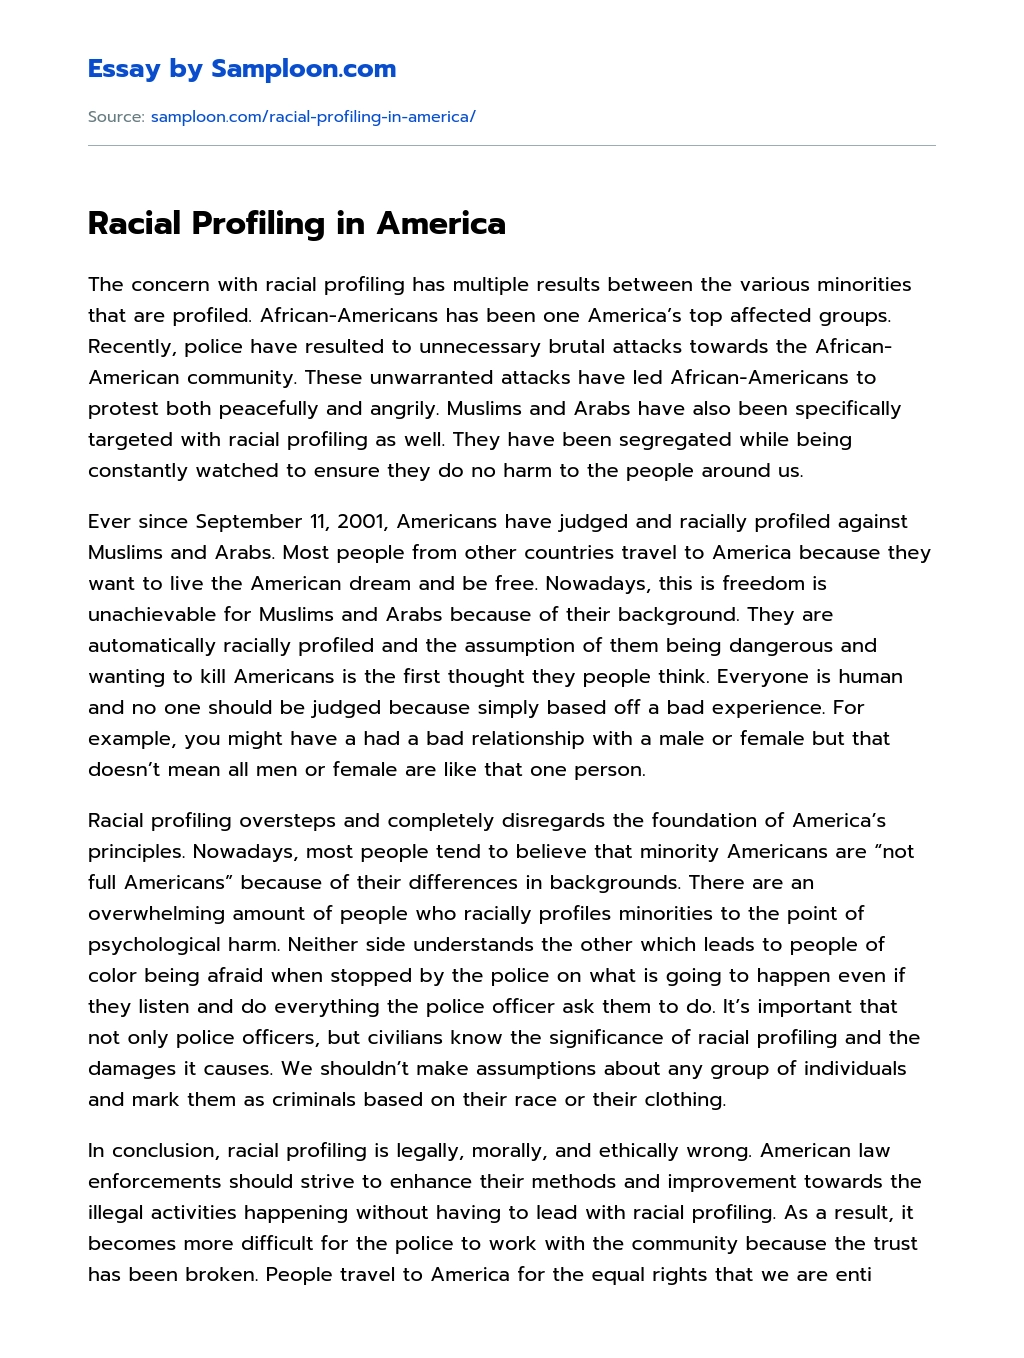 Racial Profiling in America essay